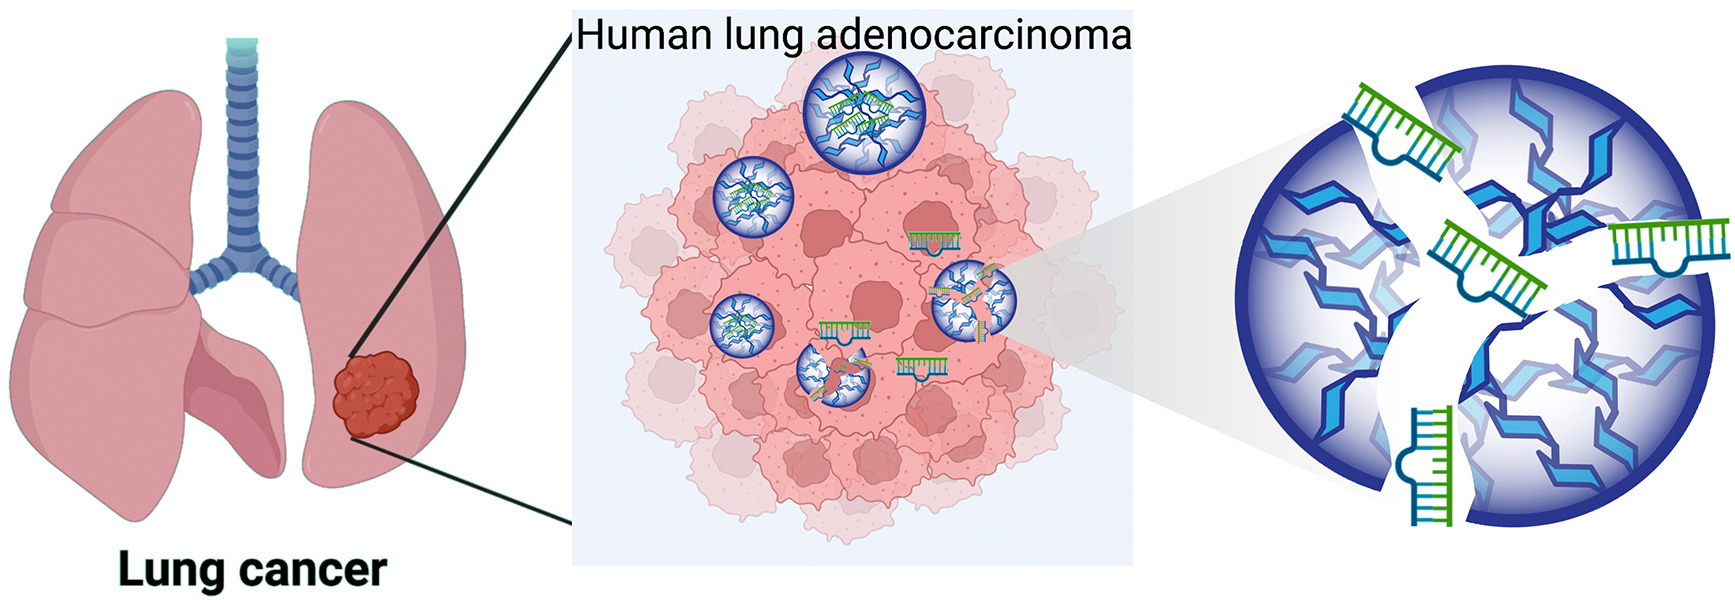 “Anticancer activity of NFκB decoy oligonucleotide-loaded nanoparticles against human lung cancer” V. K. Kannaujiya, G. De Rubis, K. R. Paudel, B. Manandhar, D. K. Chellappan, S. K. Singh, R. MacLoughlin, G. Gupta, D. Xenaki, P. Kumar, P. M. Hansbro, B. G. G. Oliver, P. R. Wich, K. Dua J. Drug Delivery Sci. Technol. 2023, 82, 104328. (DOI: 10.1016/j.jddst.2023.104328)